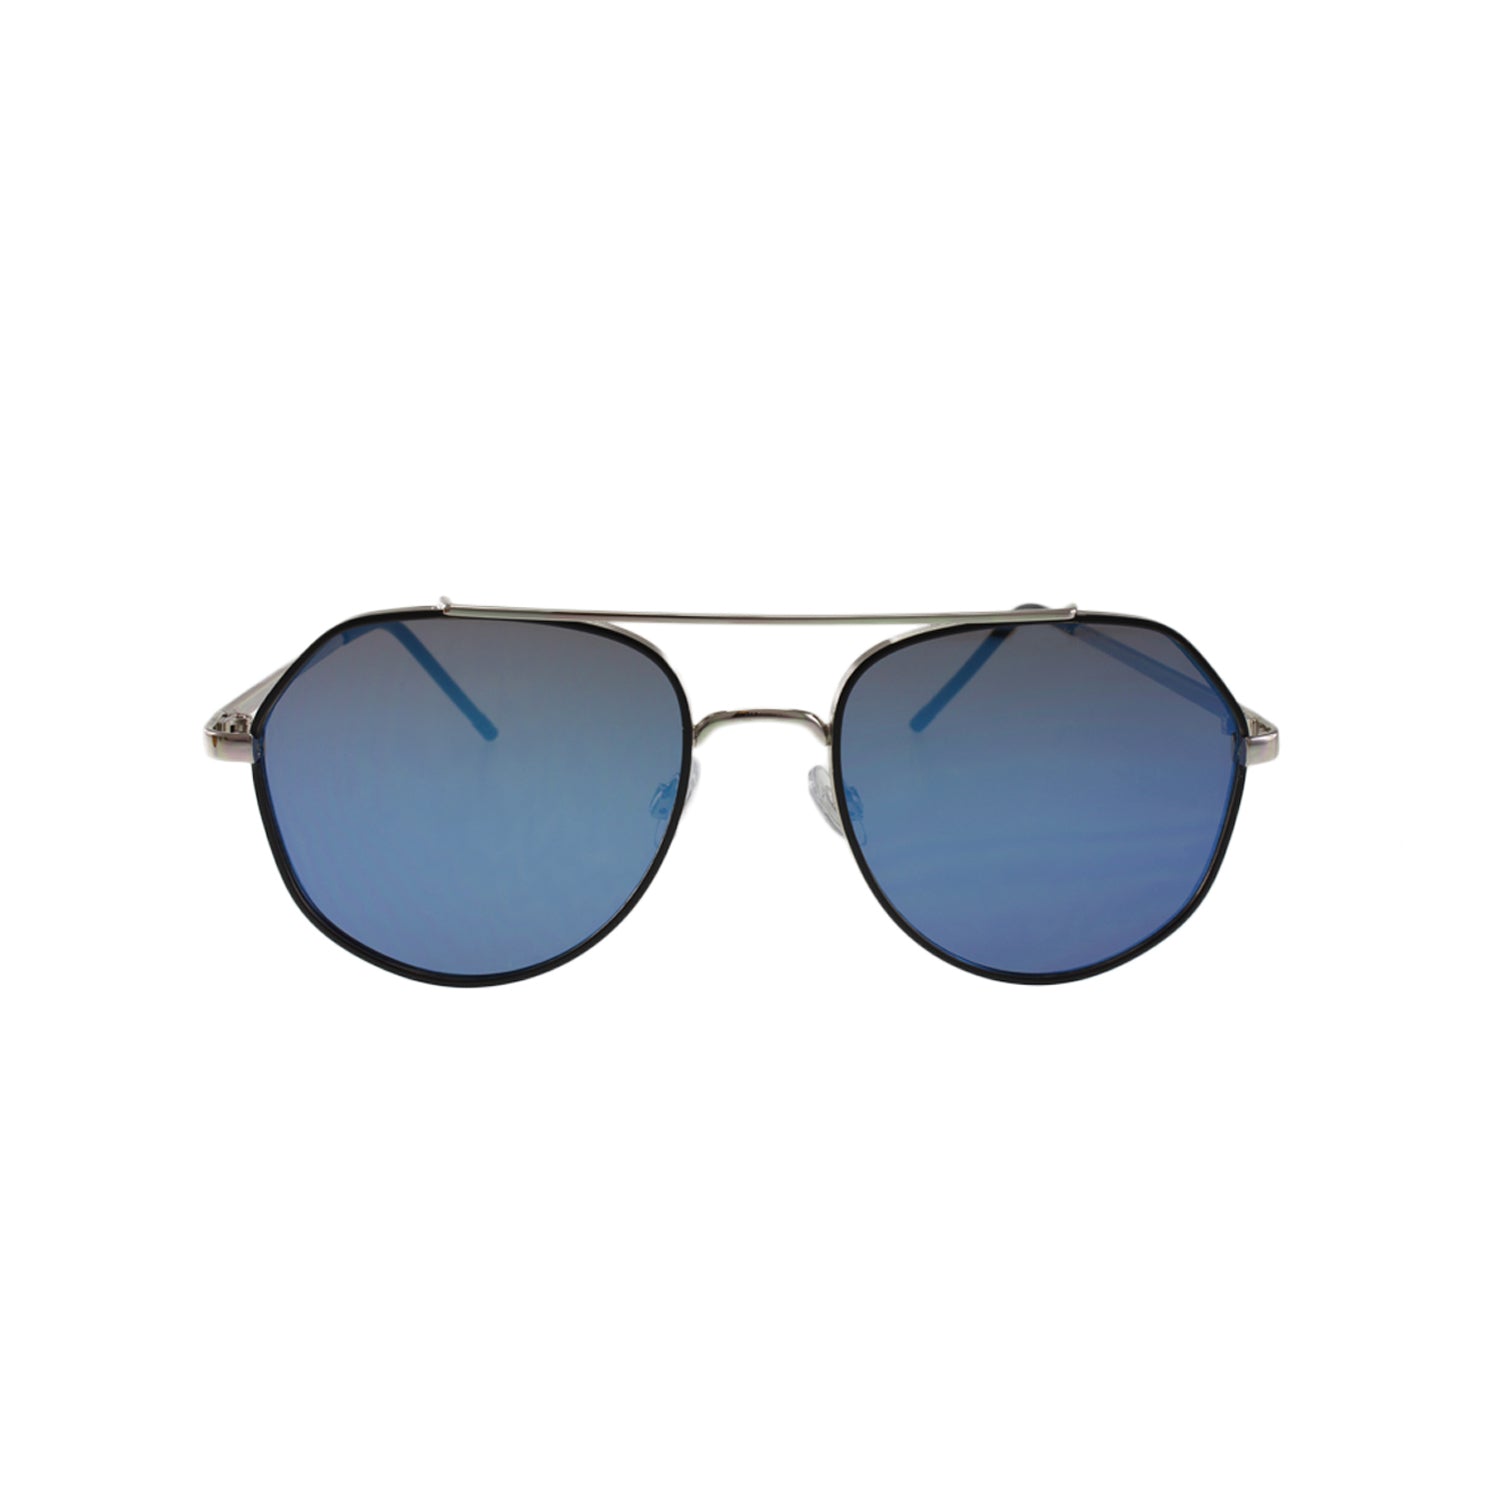 Biltmore Sunglasses in Blue - Shop Luxurious57